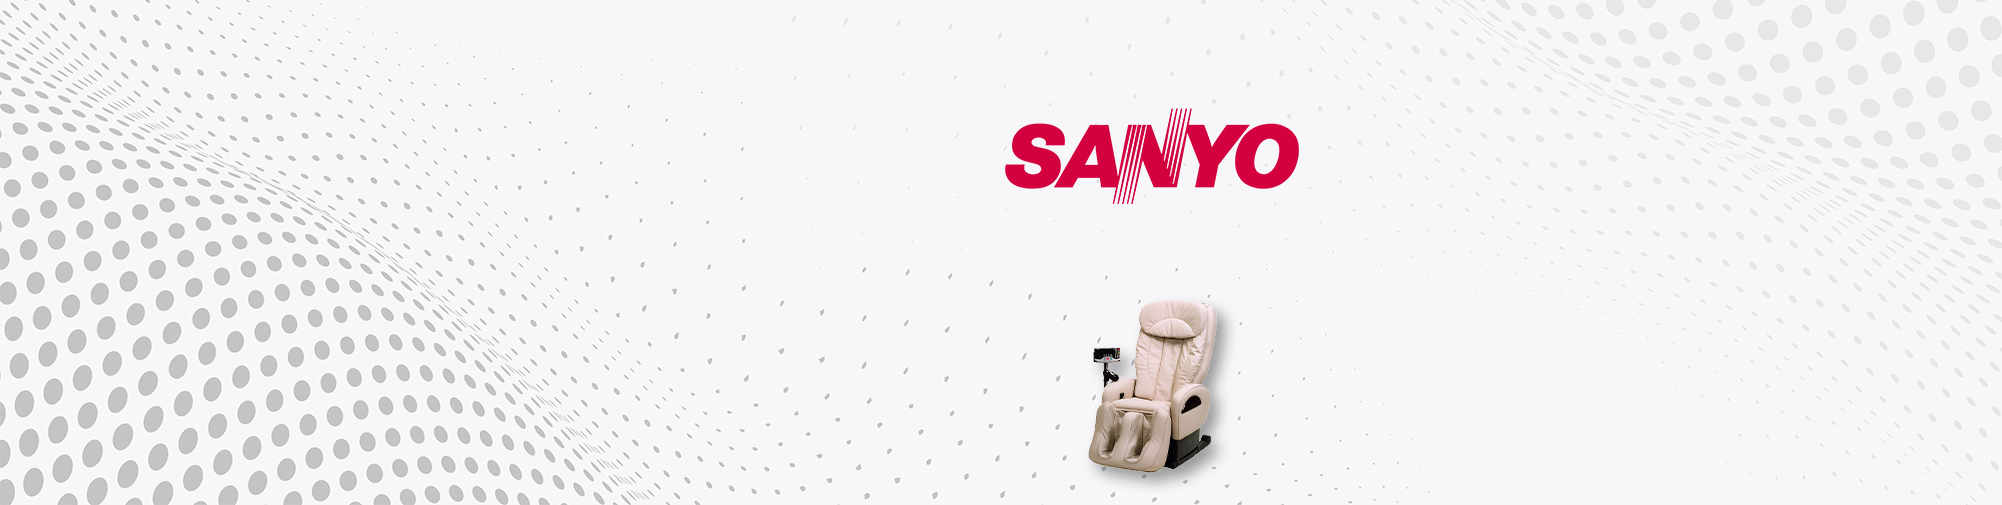 SANYO - японска марка | Massage Chair World